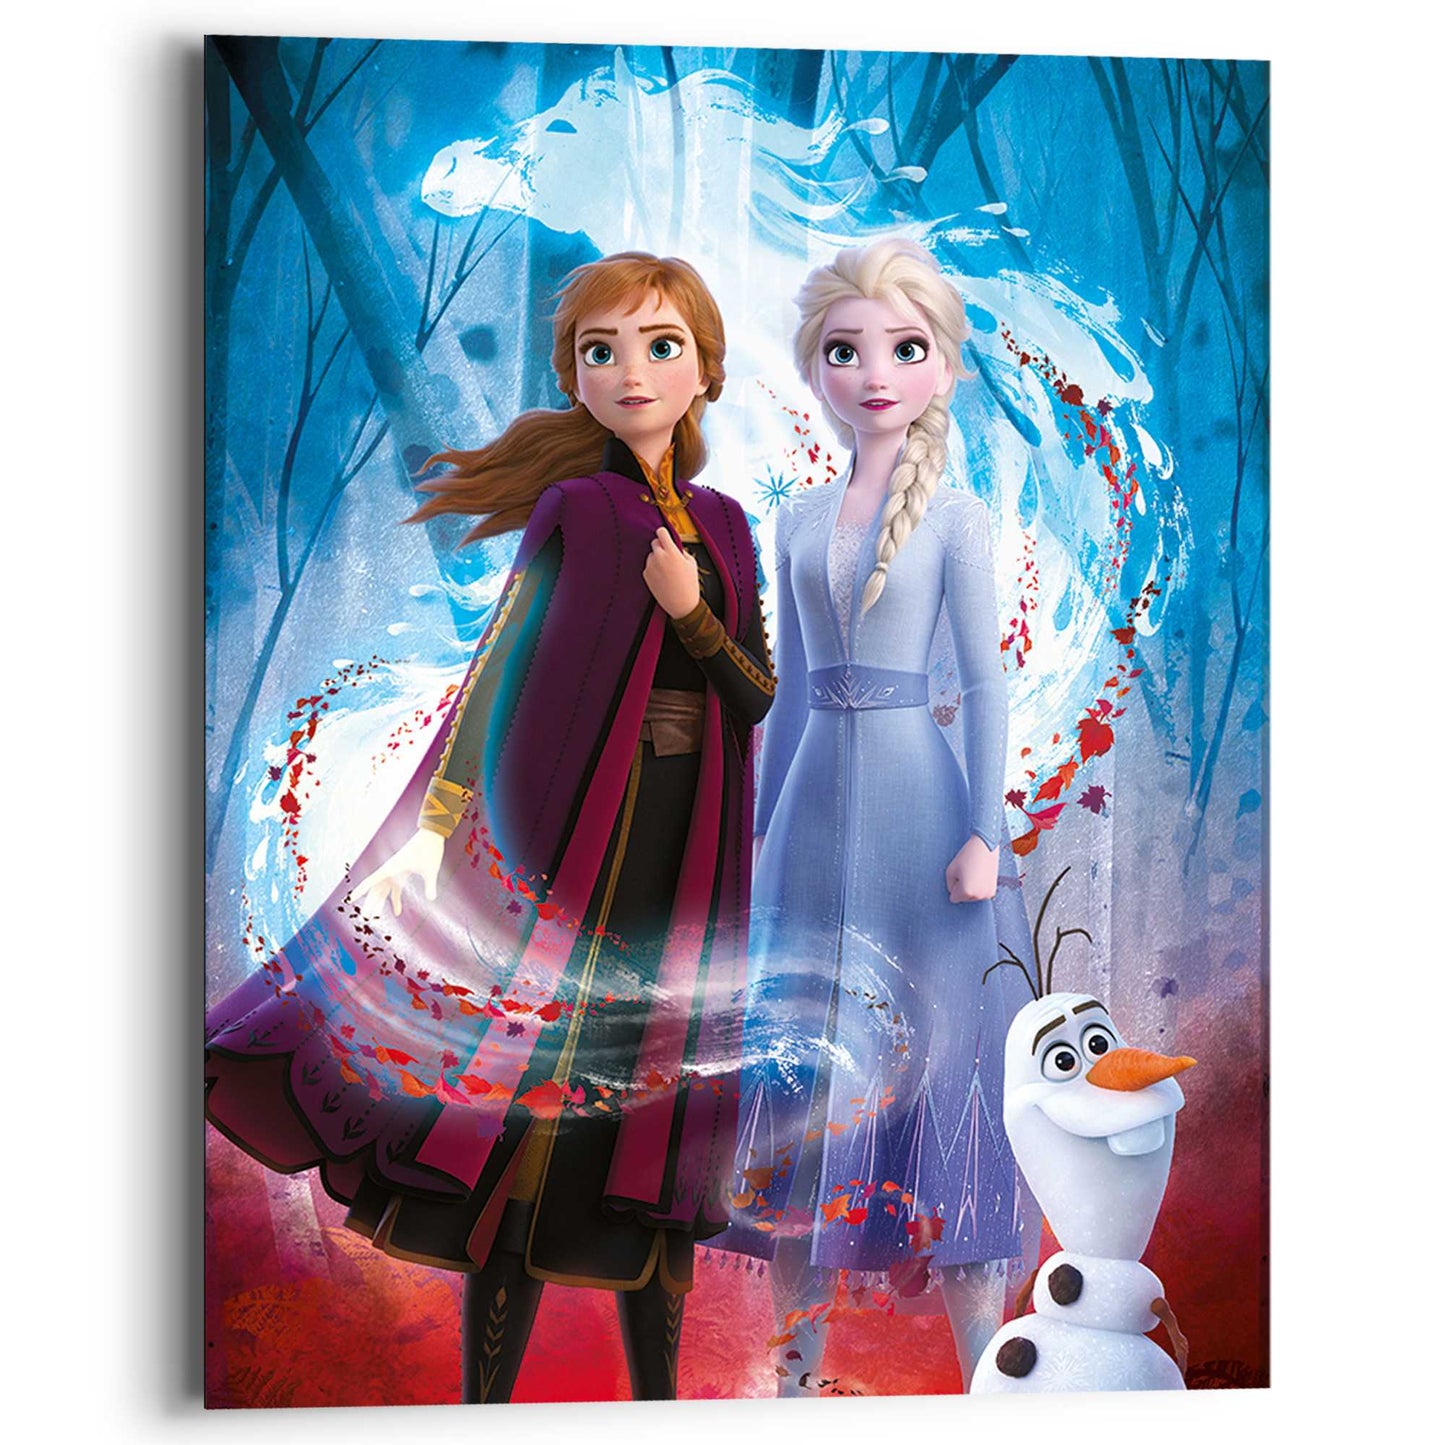 Painting Disney Frozen 2 - Guiding Spirit 50x40